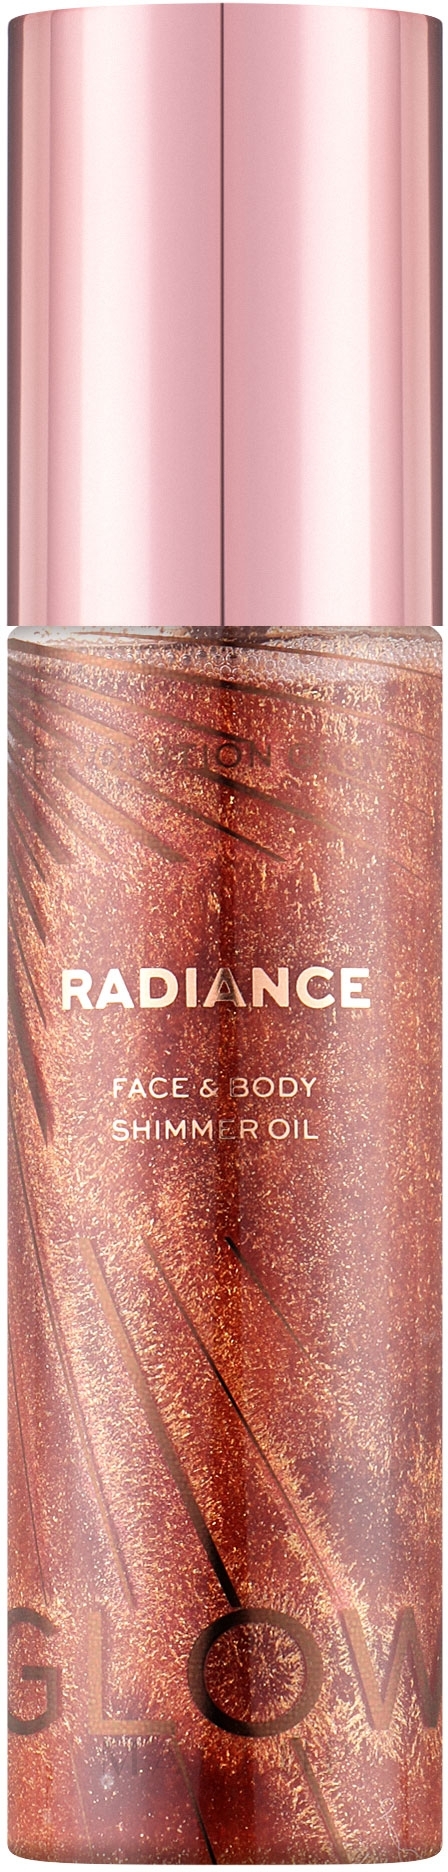 Highlighter-Öl - Makeup Revolution Radiance Face & Body Shimmer Oil — Bild Bronze